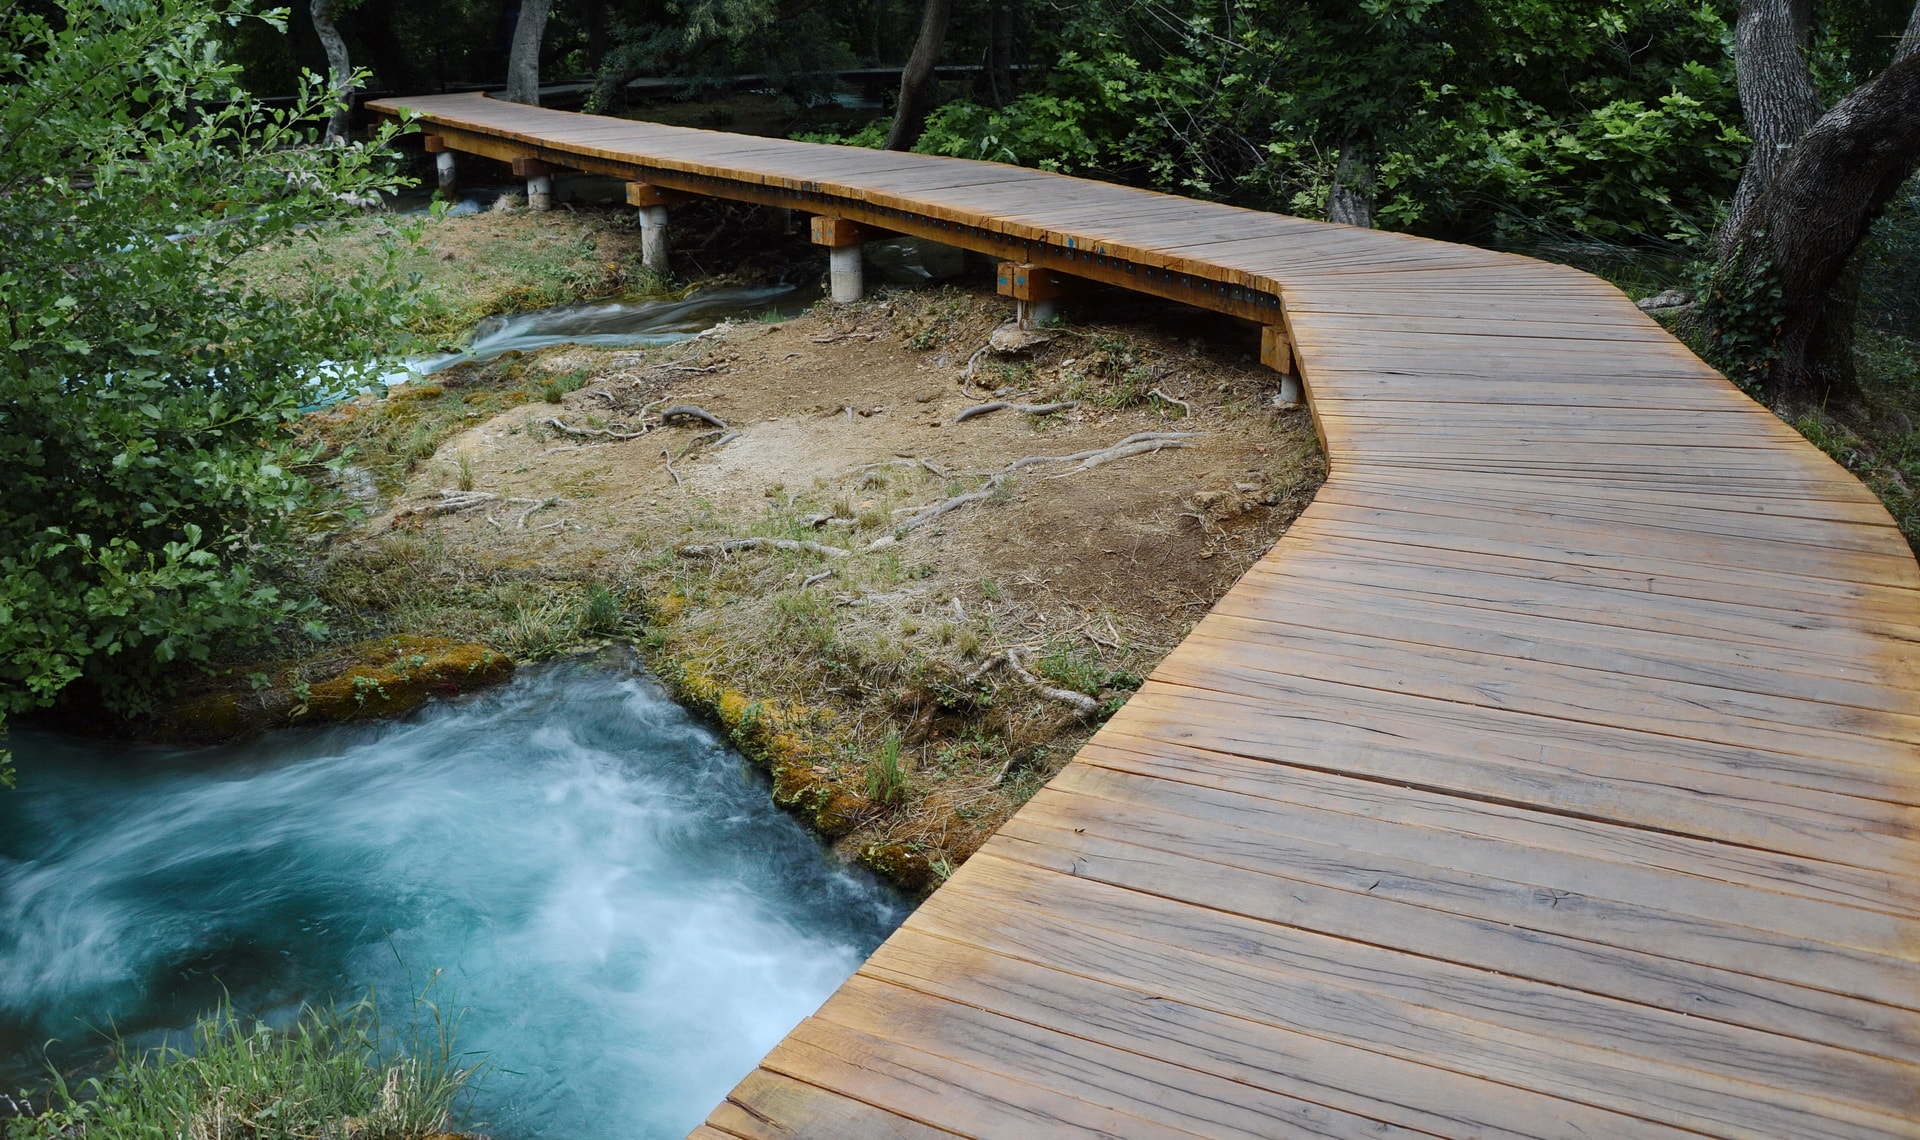 Dark blue water streams underneath the wooden bridges